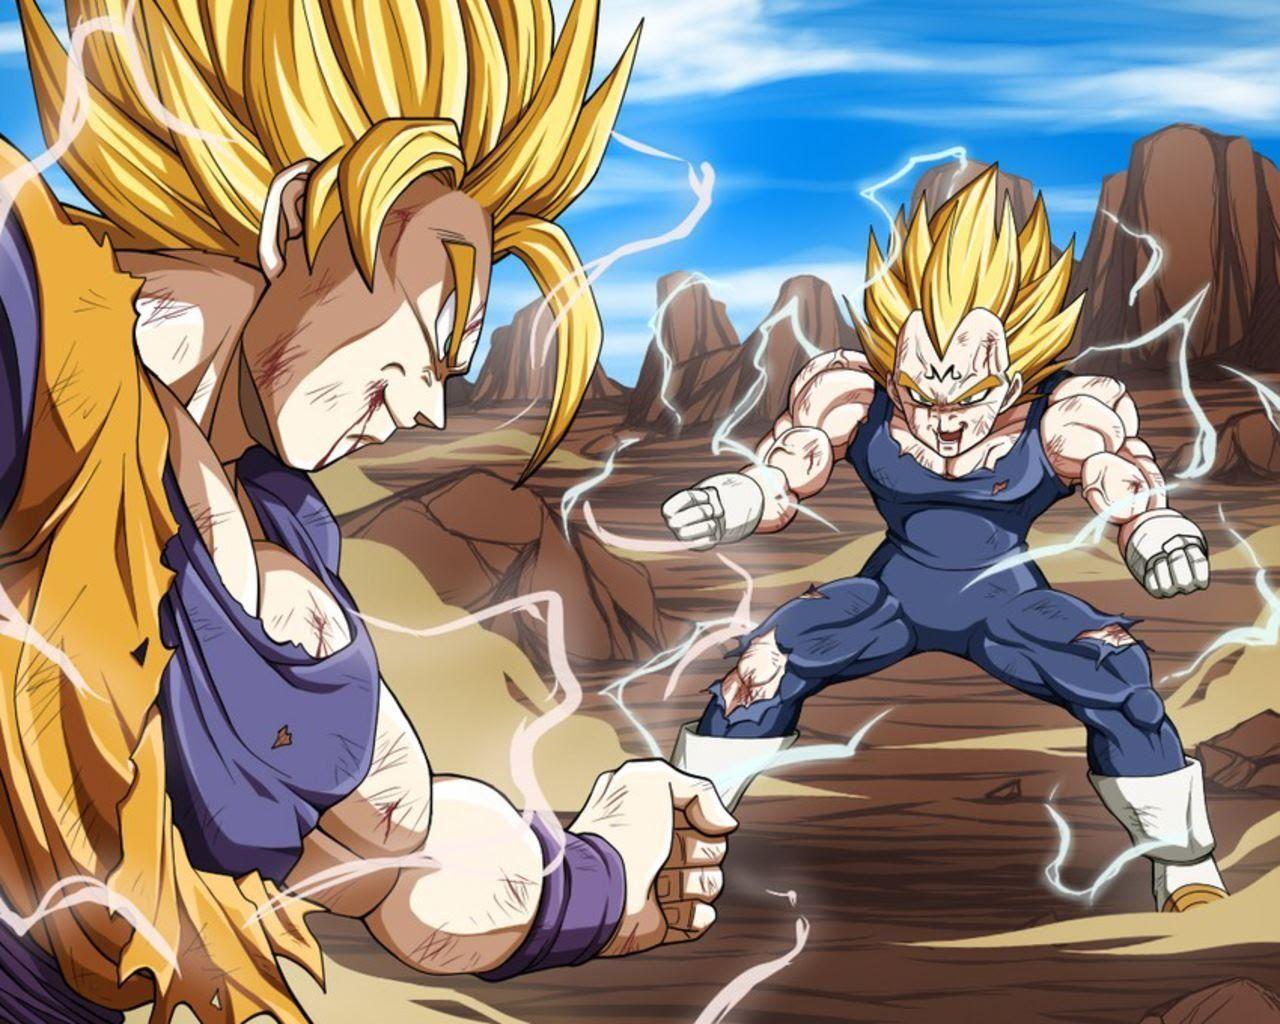 AMV Runnin Goku vs Majin Vegeta